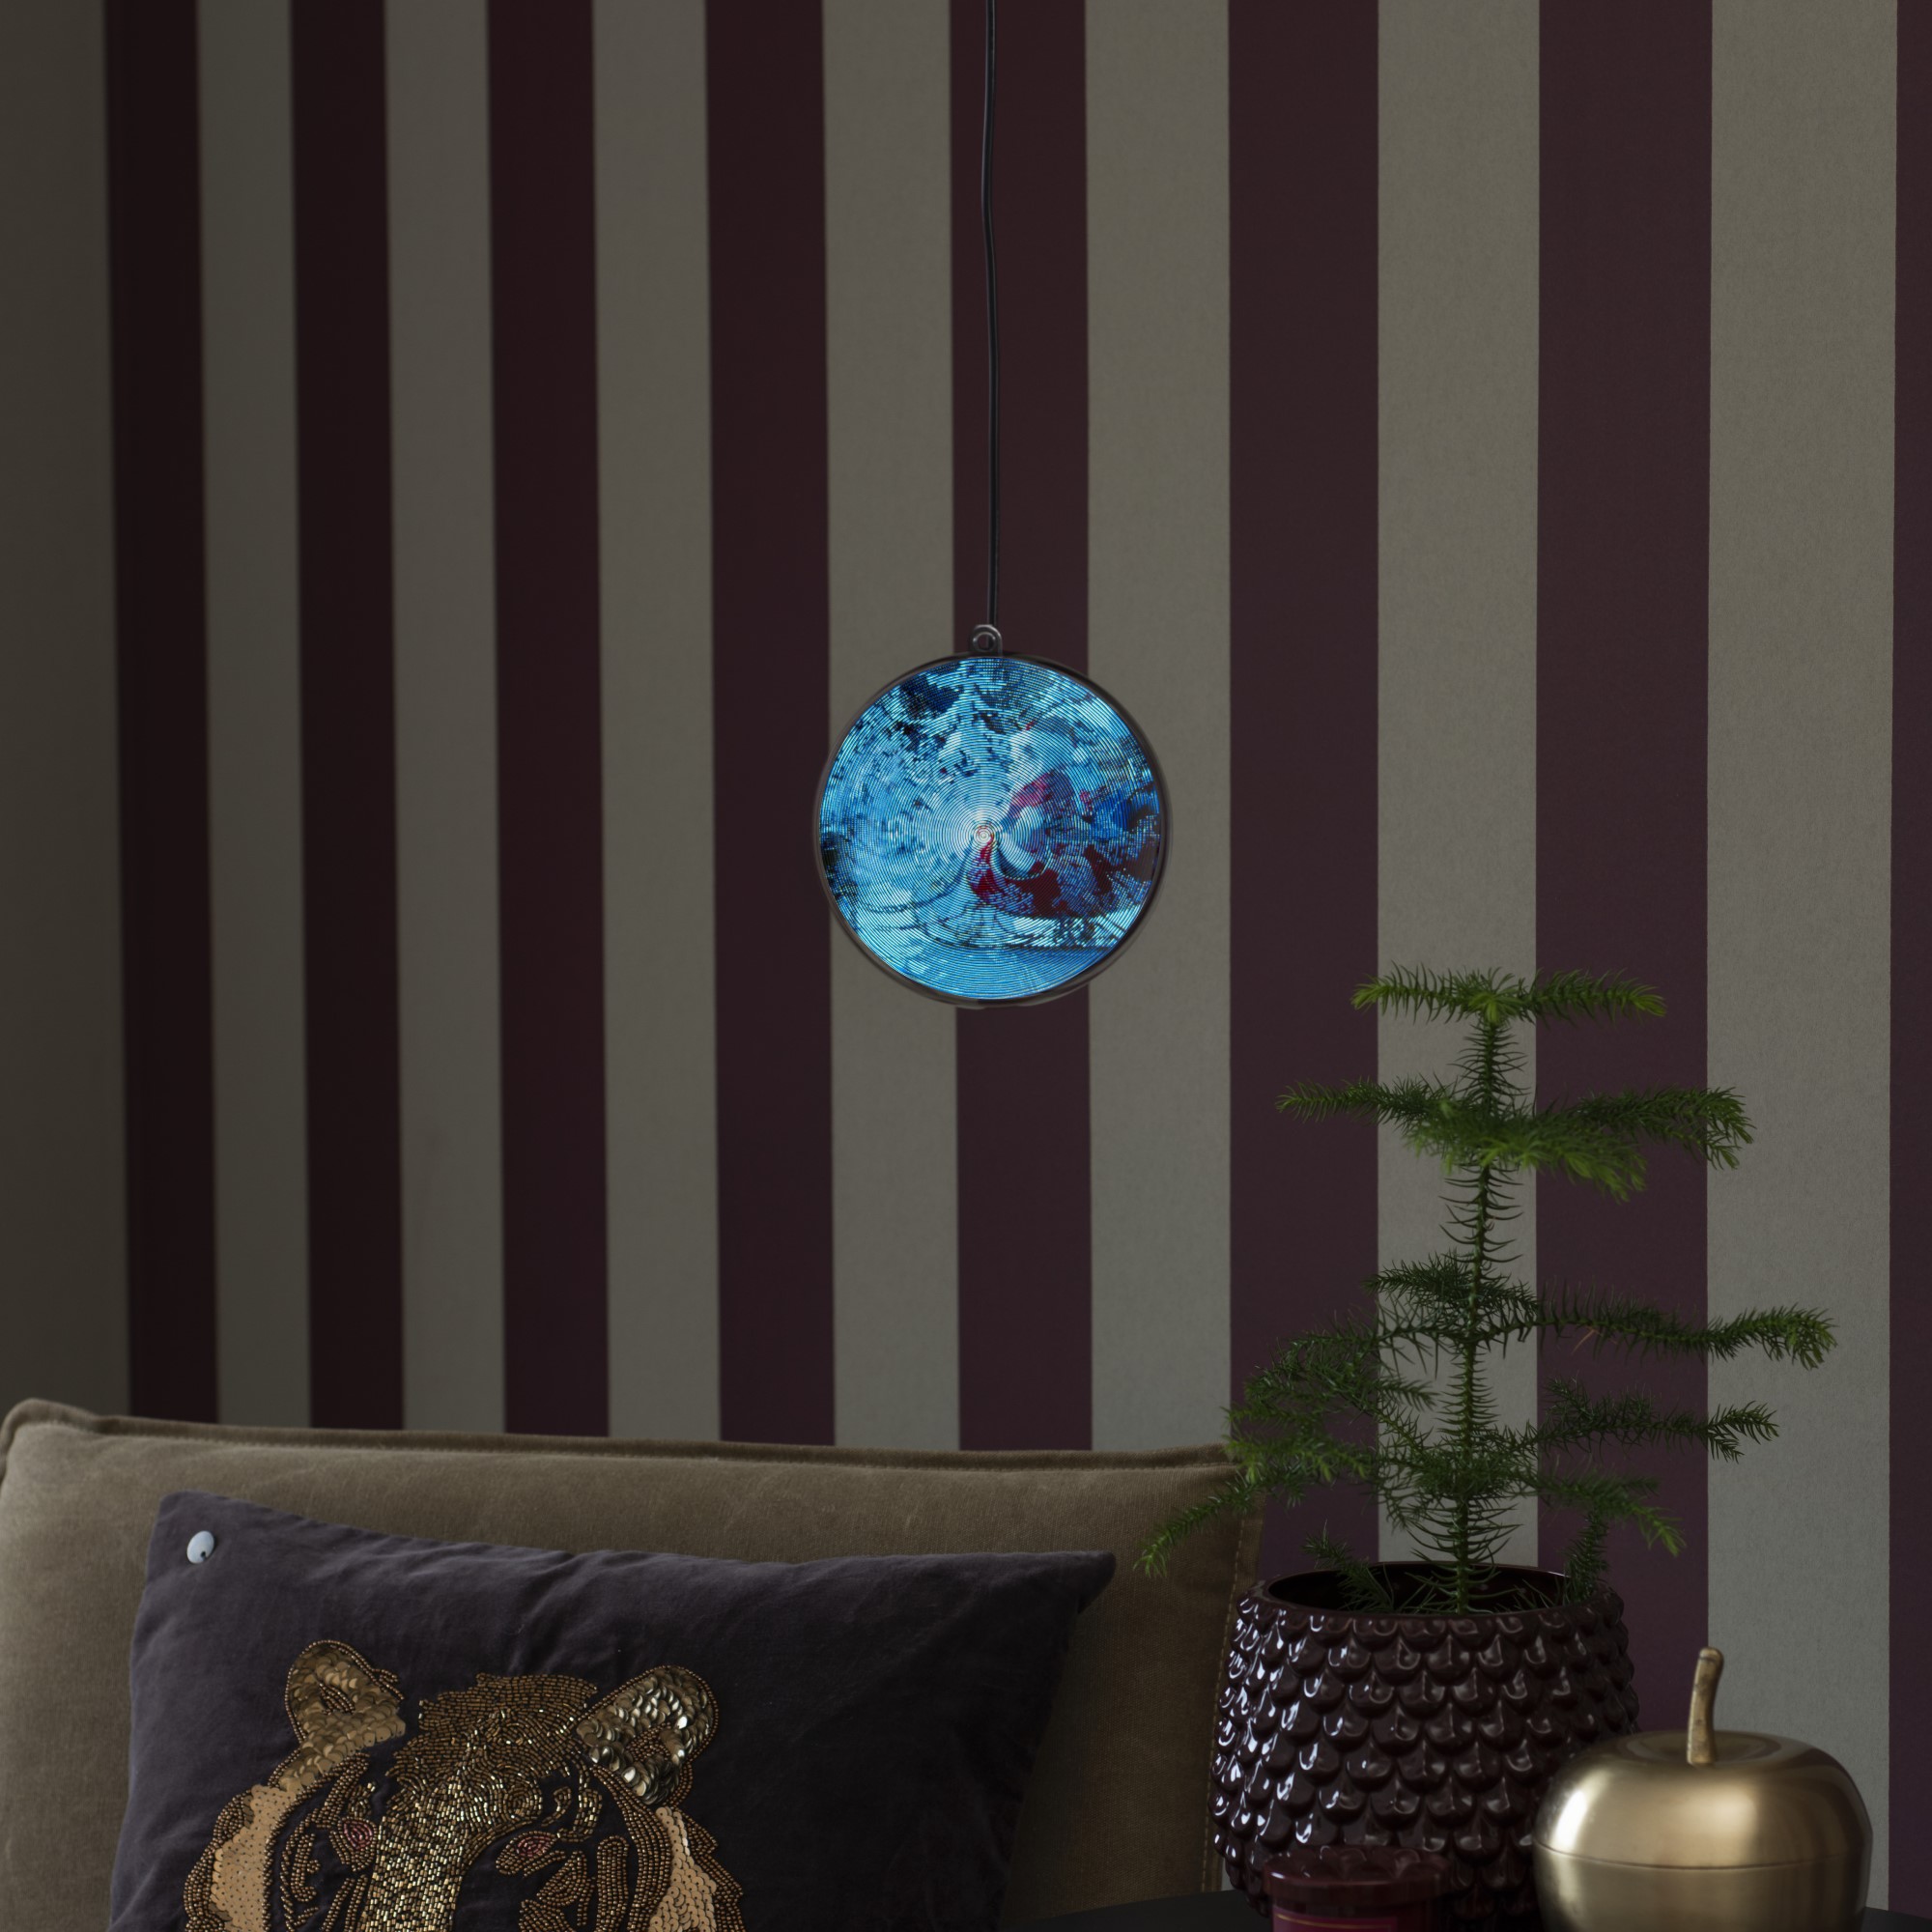 Konstsmide 3D LED Hologram Globe, Father Christmas with Sleigh, 64 LEDs, 2h Timer, 15cm